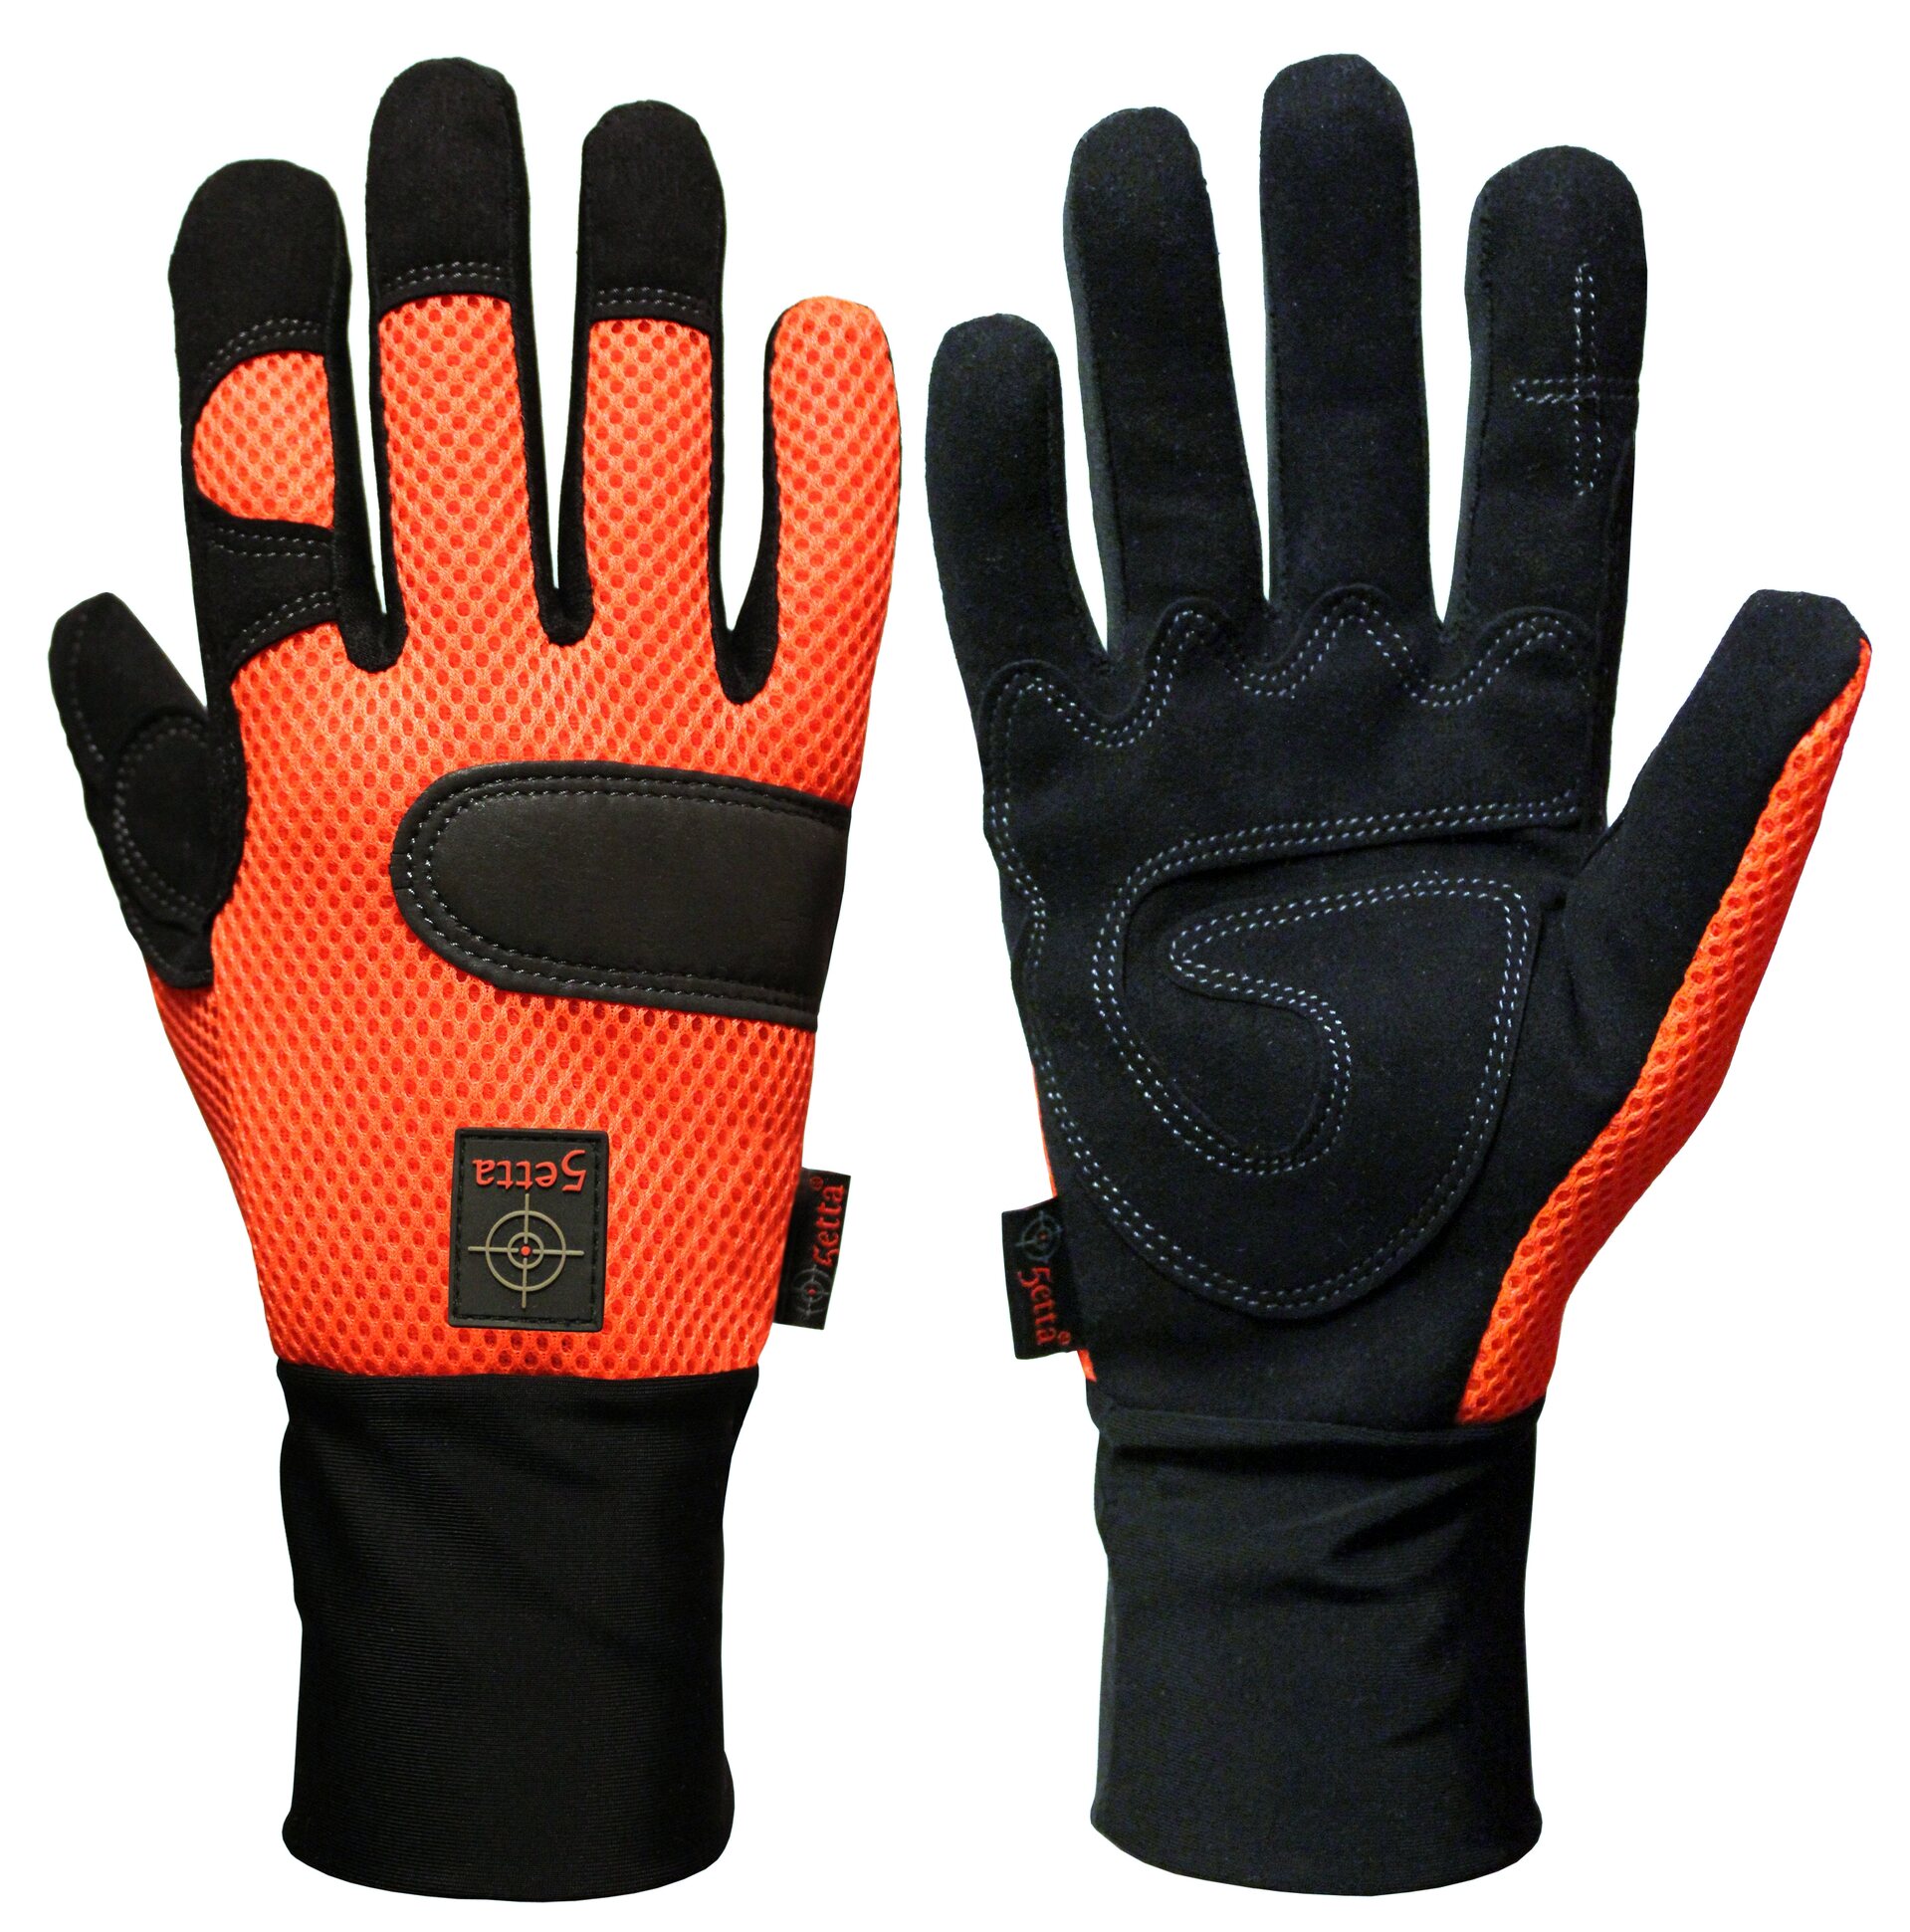 Перчатки no 8. Awgnw09 перчатки. Defender 8.719 перчатки. Handling Gloves. Polyfit перчатки 8.518.